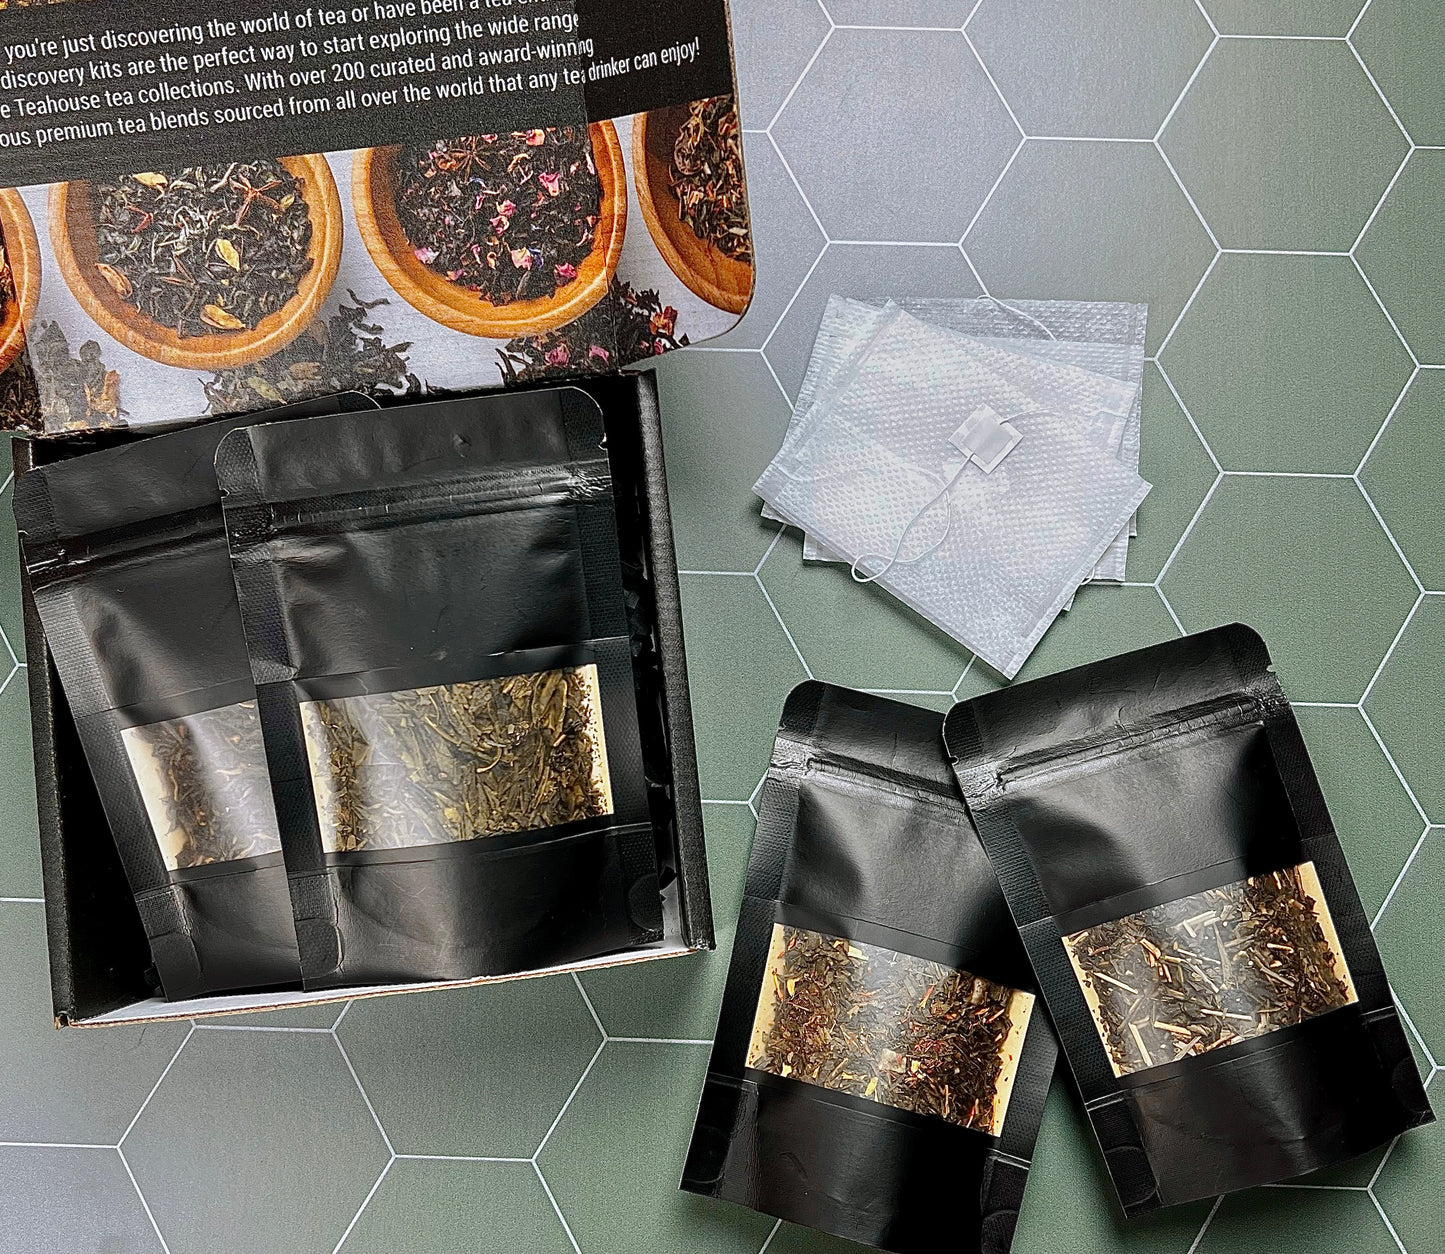 Green Tea Discovery Kit